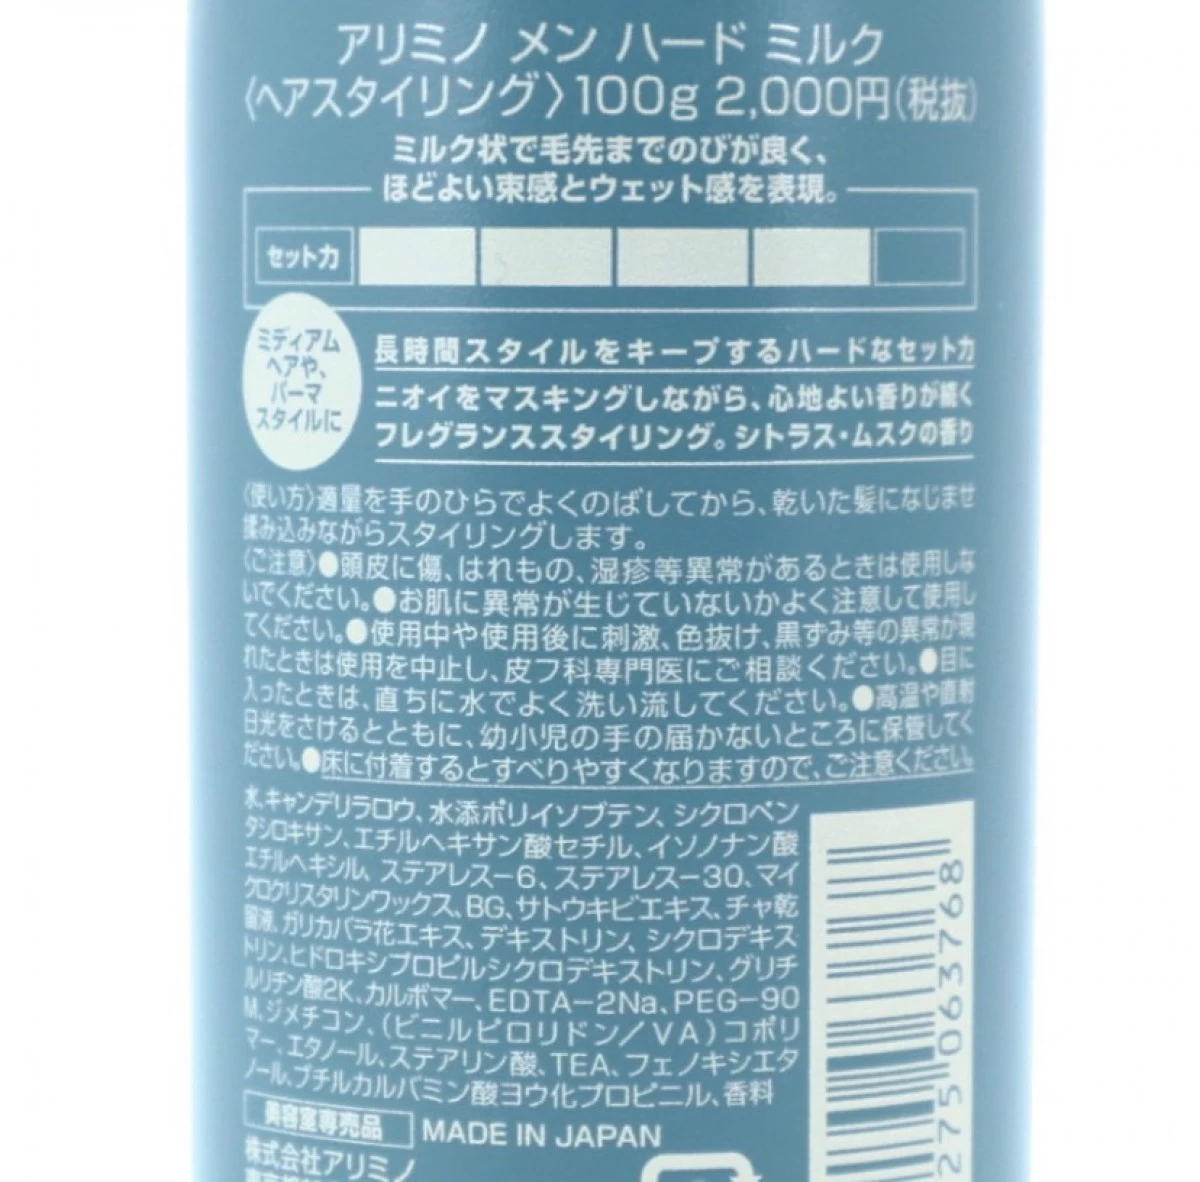 ㉖【ARIMINO MEN】ハード ミルク - 株式会社 RISE